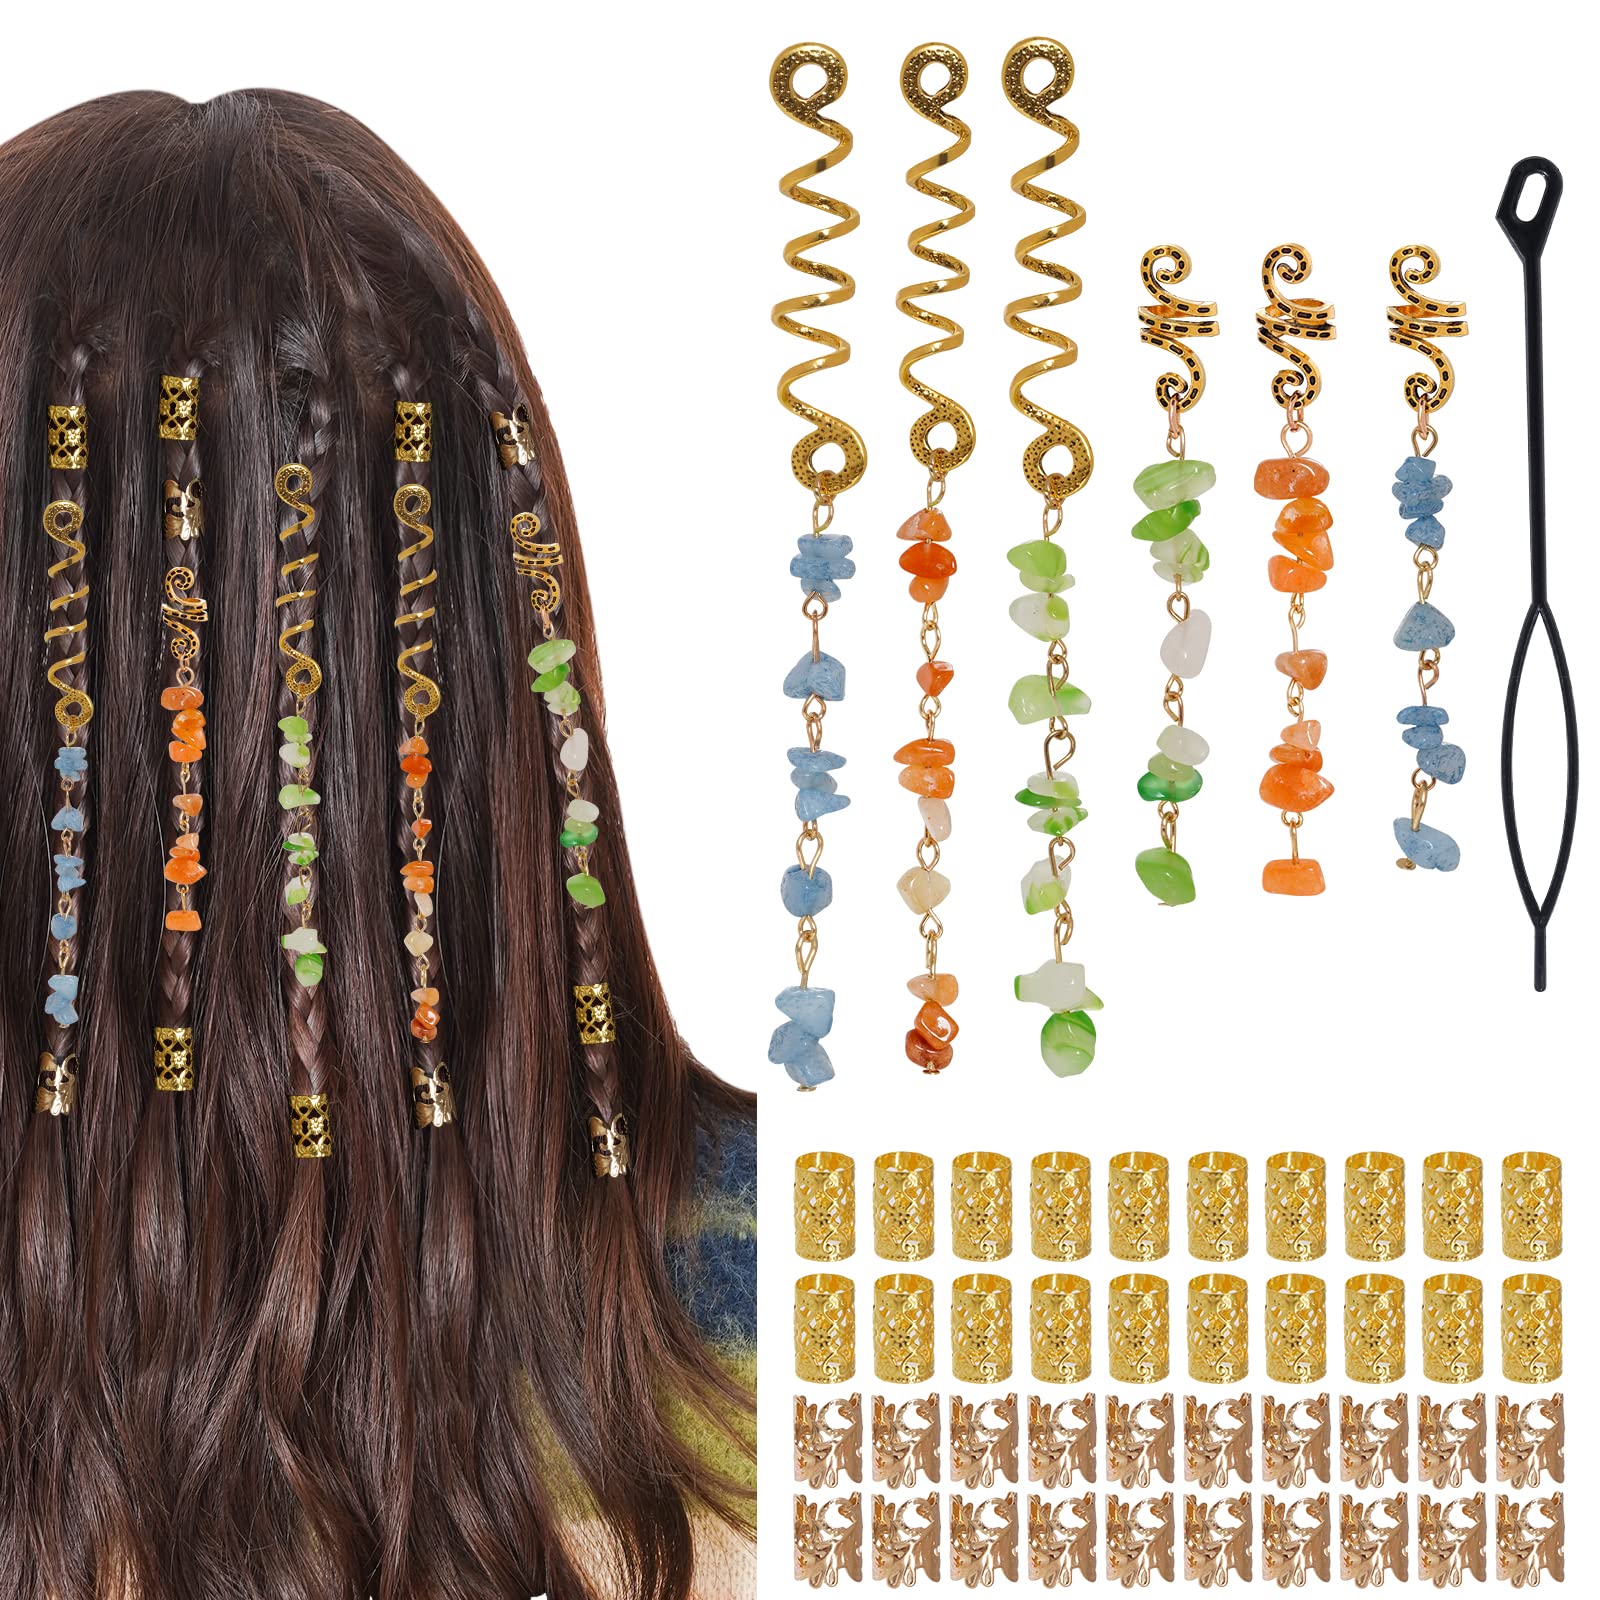 Natural Stone Pendant Hair, Charms Beads Hairpin, Braid Stones Hair